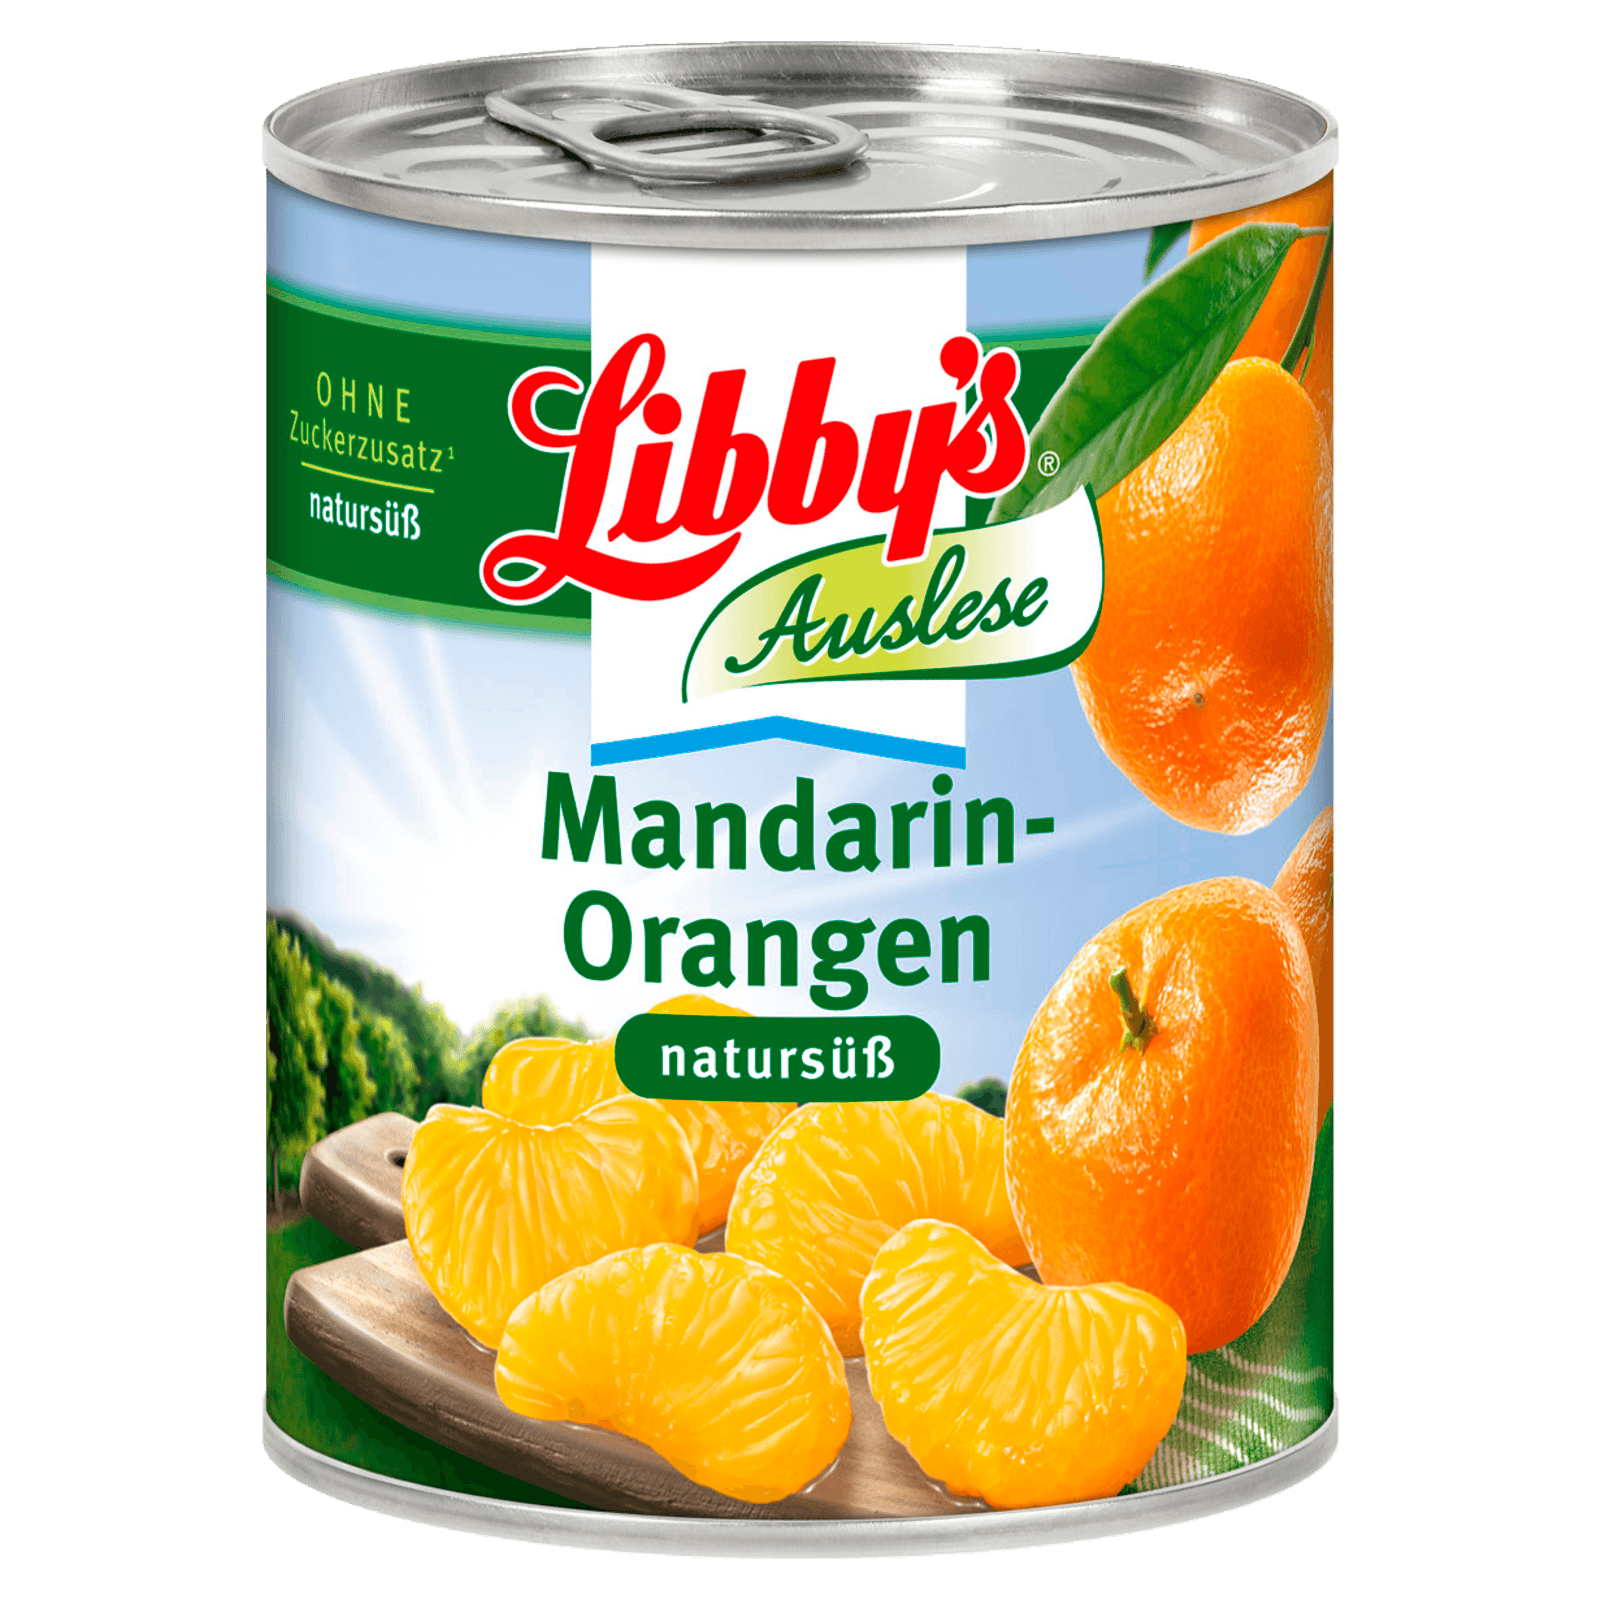 Libby's Mandarin-Orangen natursüß 175g  für 2.79 EUR